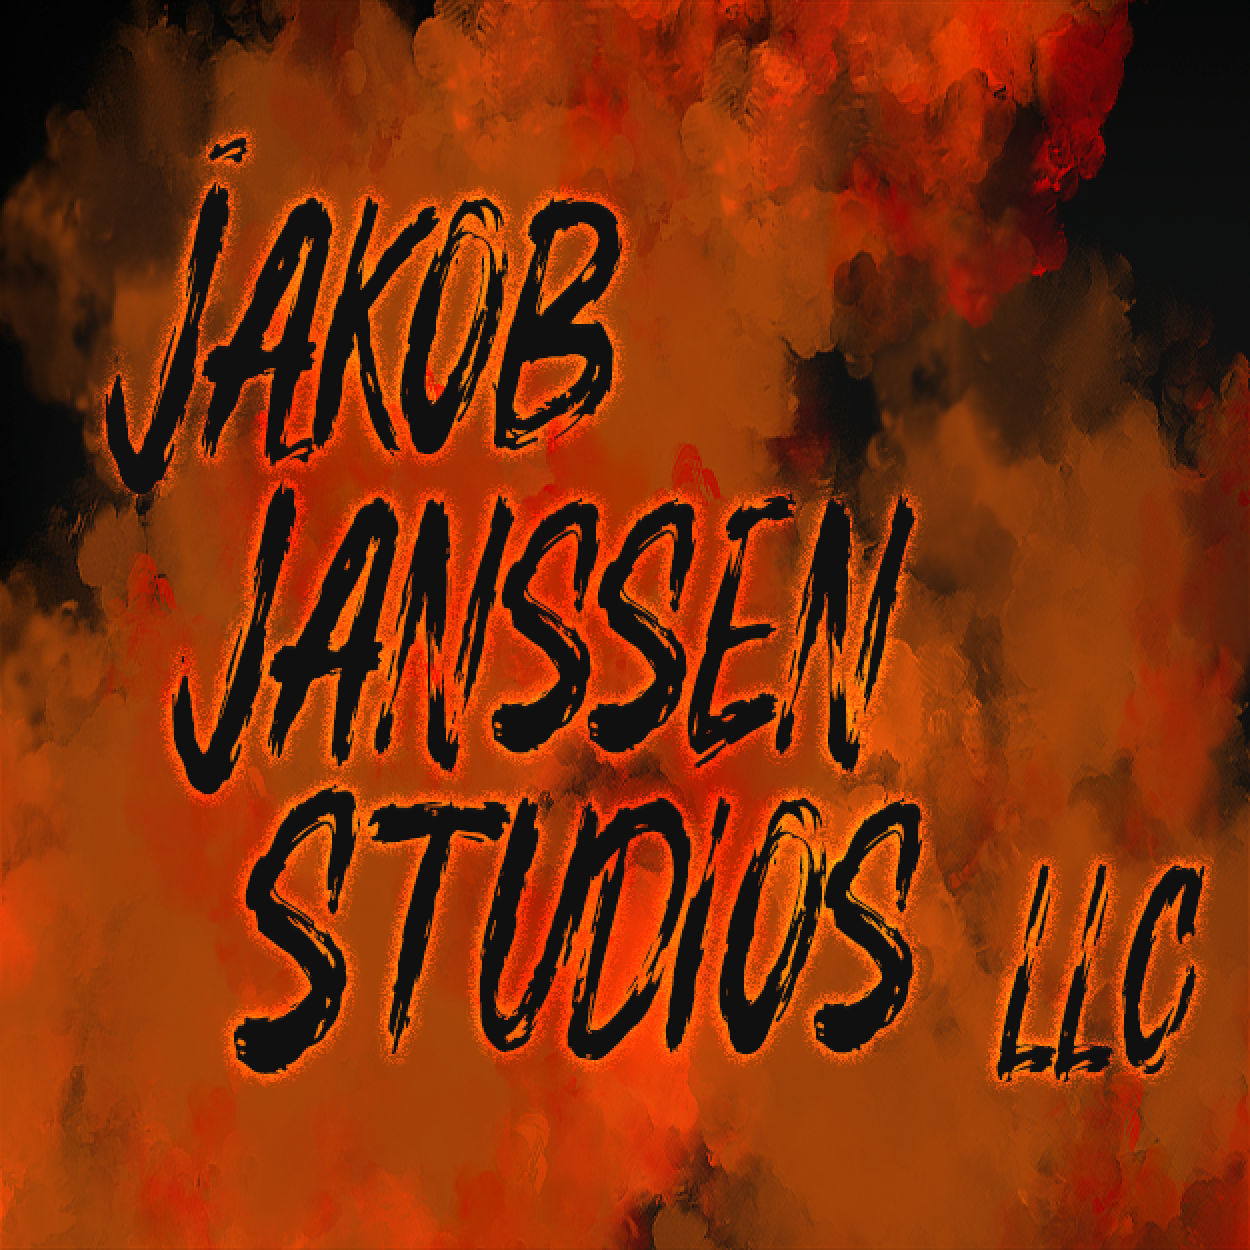 Jakob Janssen Studios